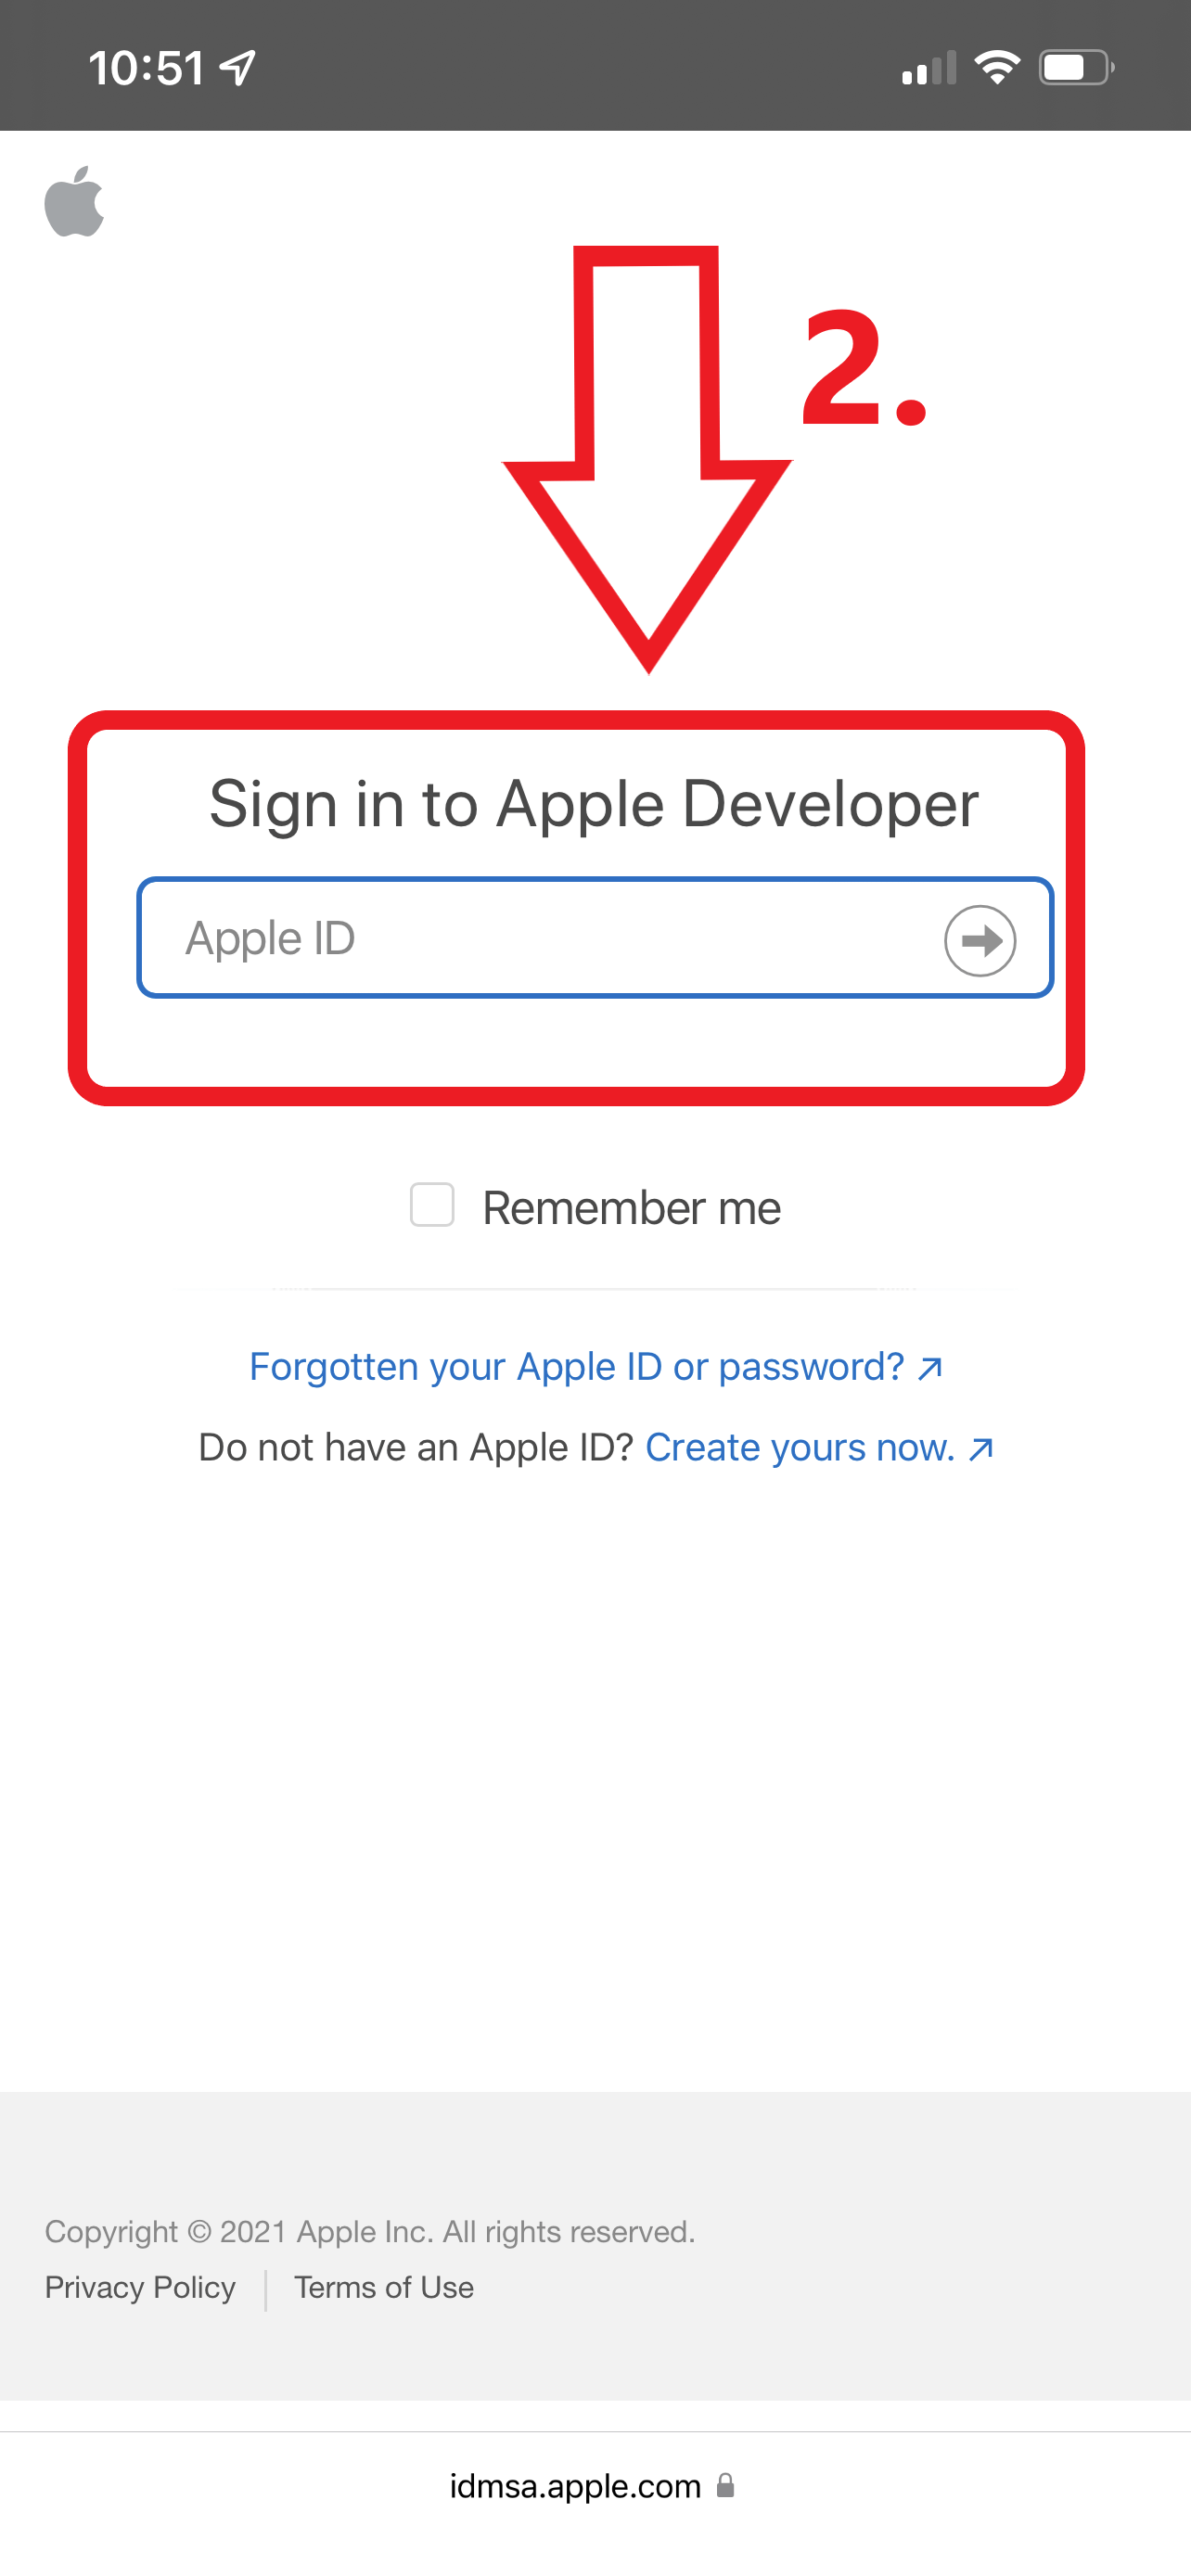 Login through developers.apple.com